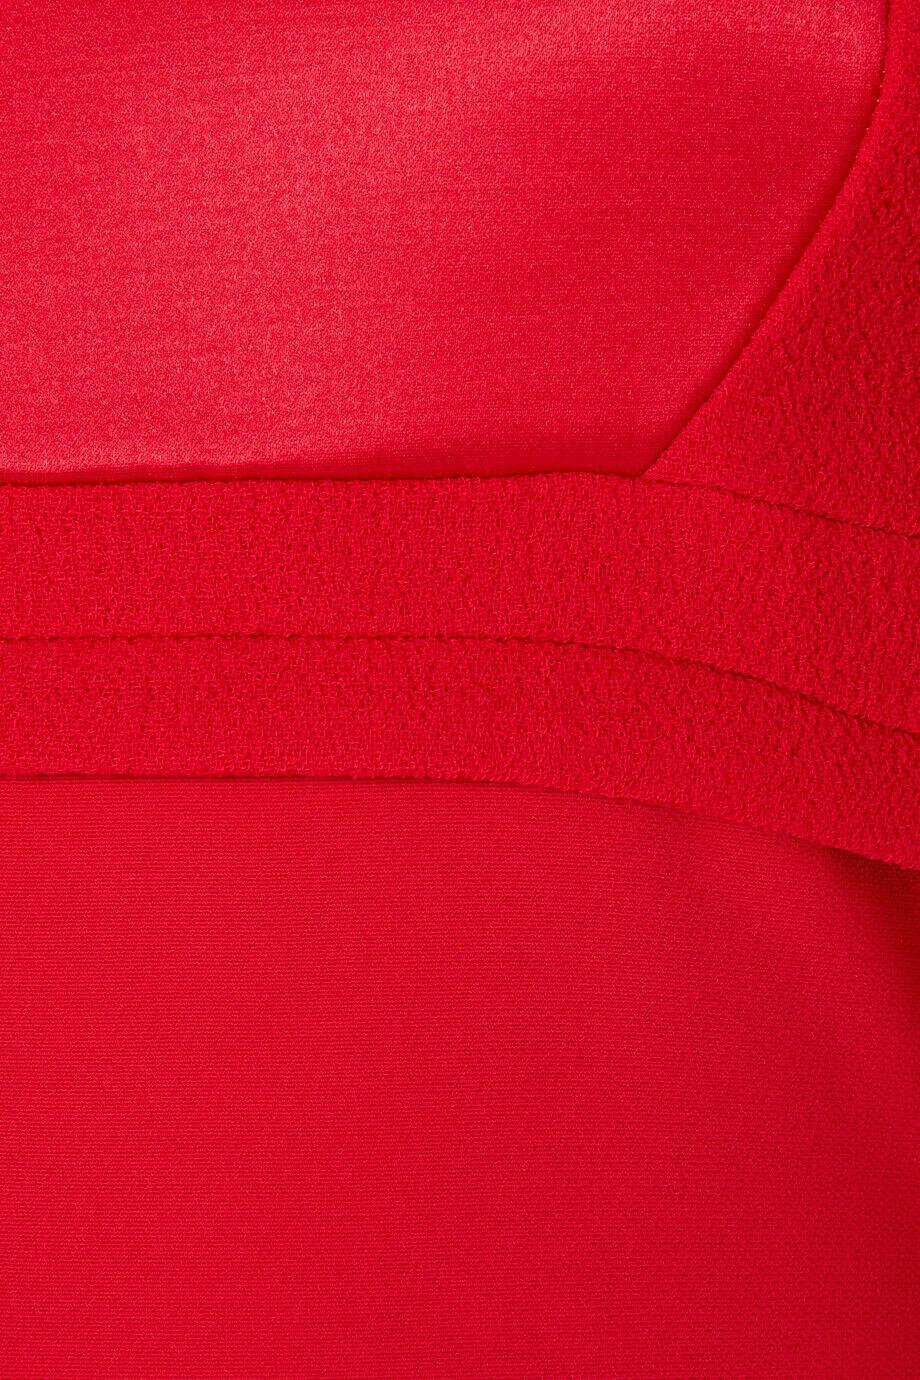 Women's New Antonio Berardi Fire red dress size IT-44, US-8 For Sale